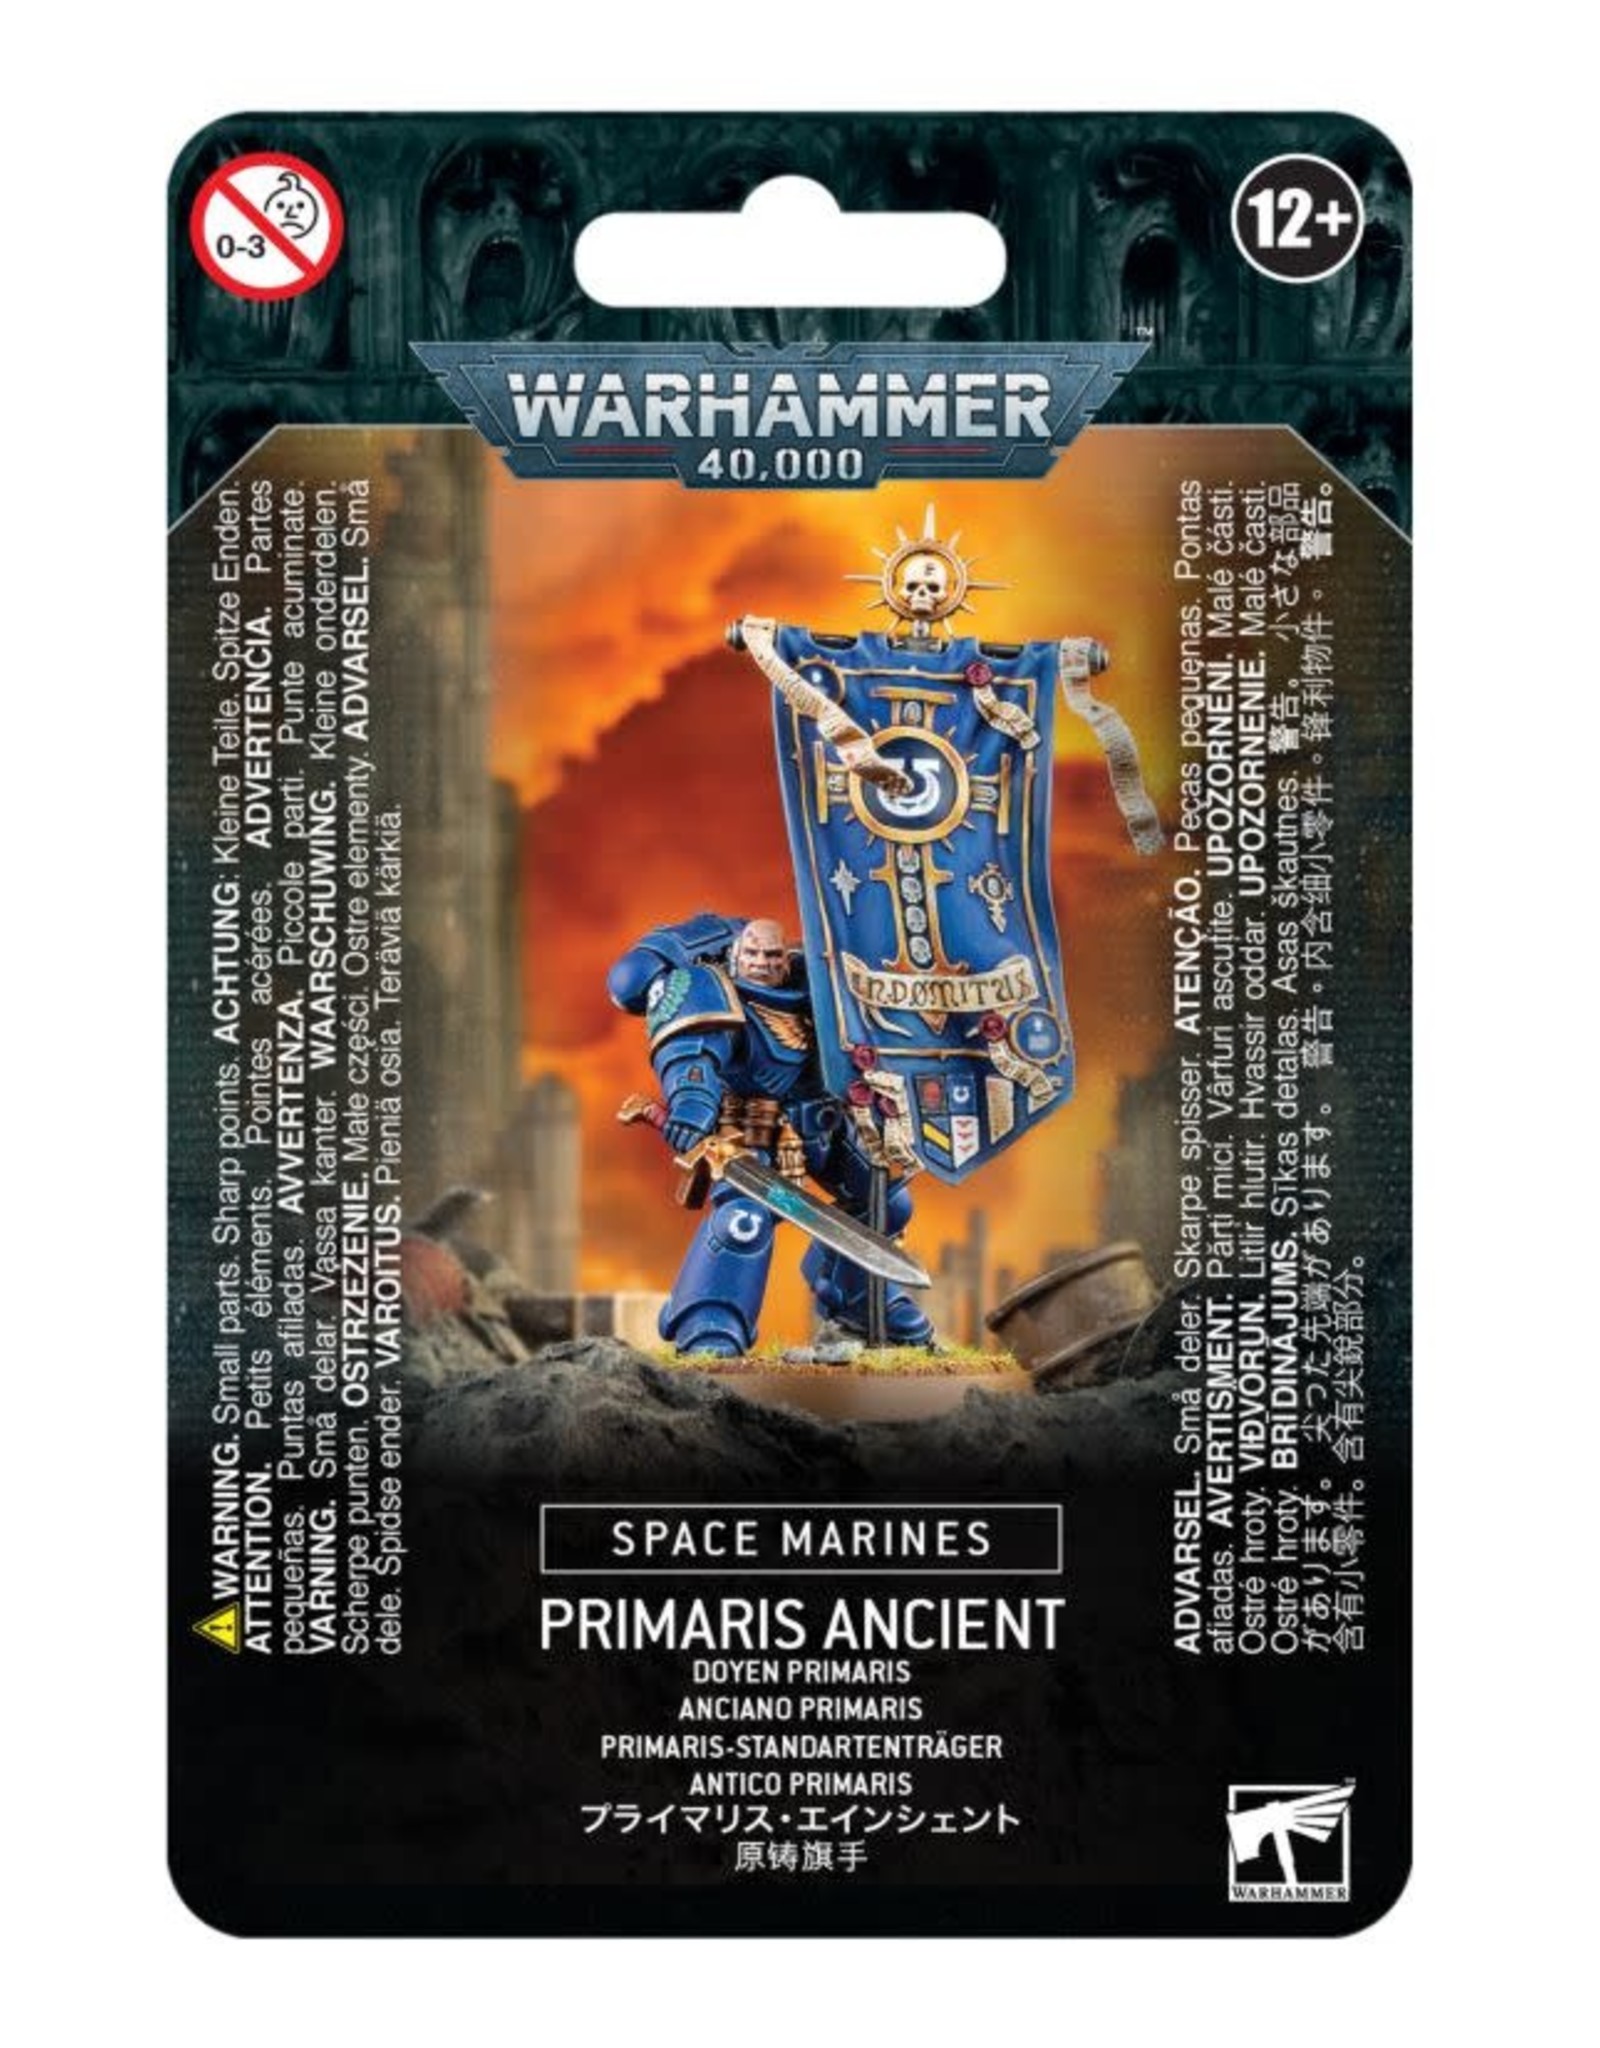 Warhammer 40k Space Marines: Primaris Ancient